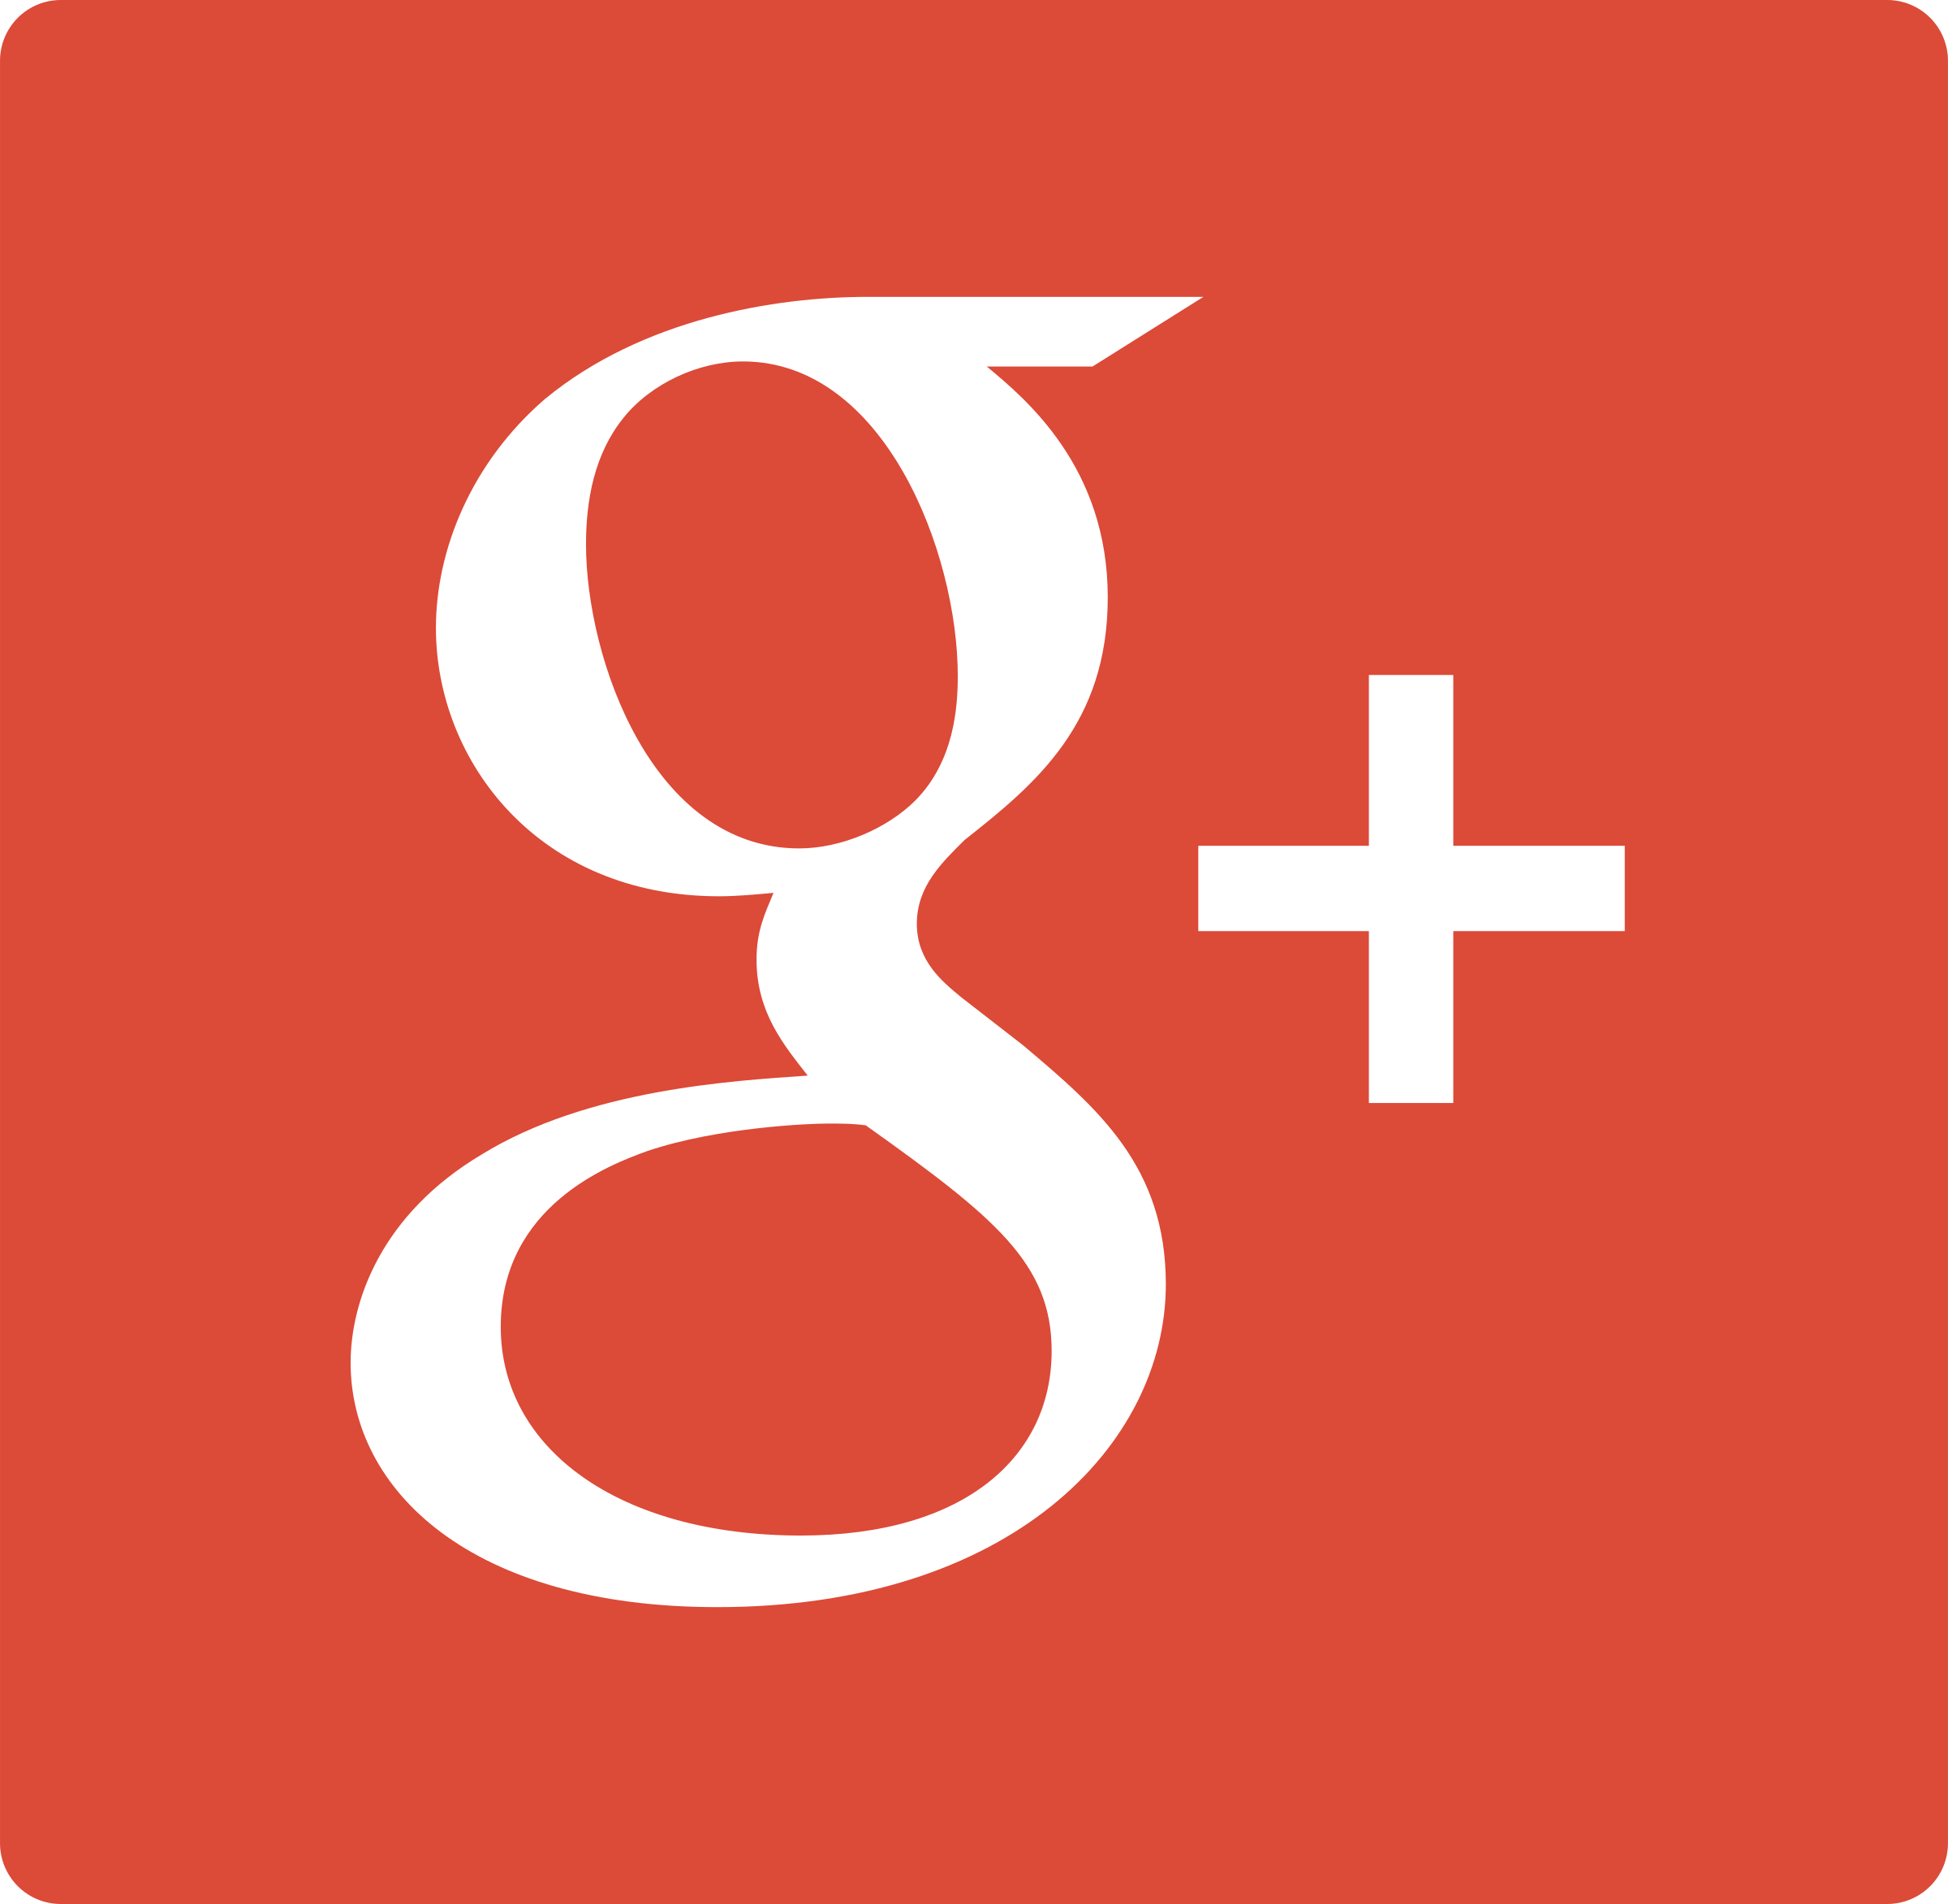 New Google Plus Logo - Google plus Logo PNG Transparent & SVG Vector - Freebie Supply